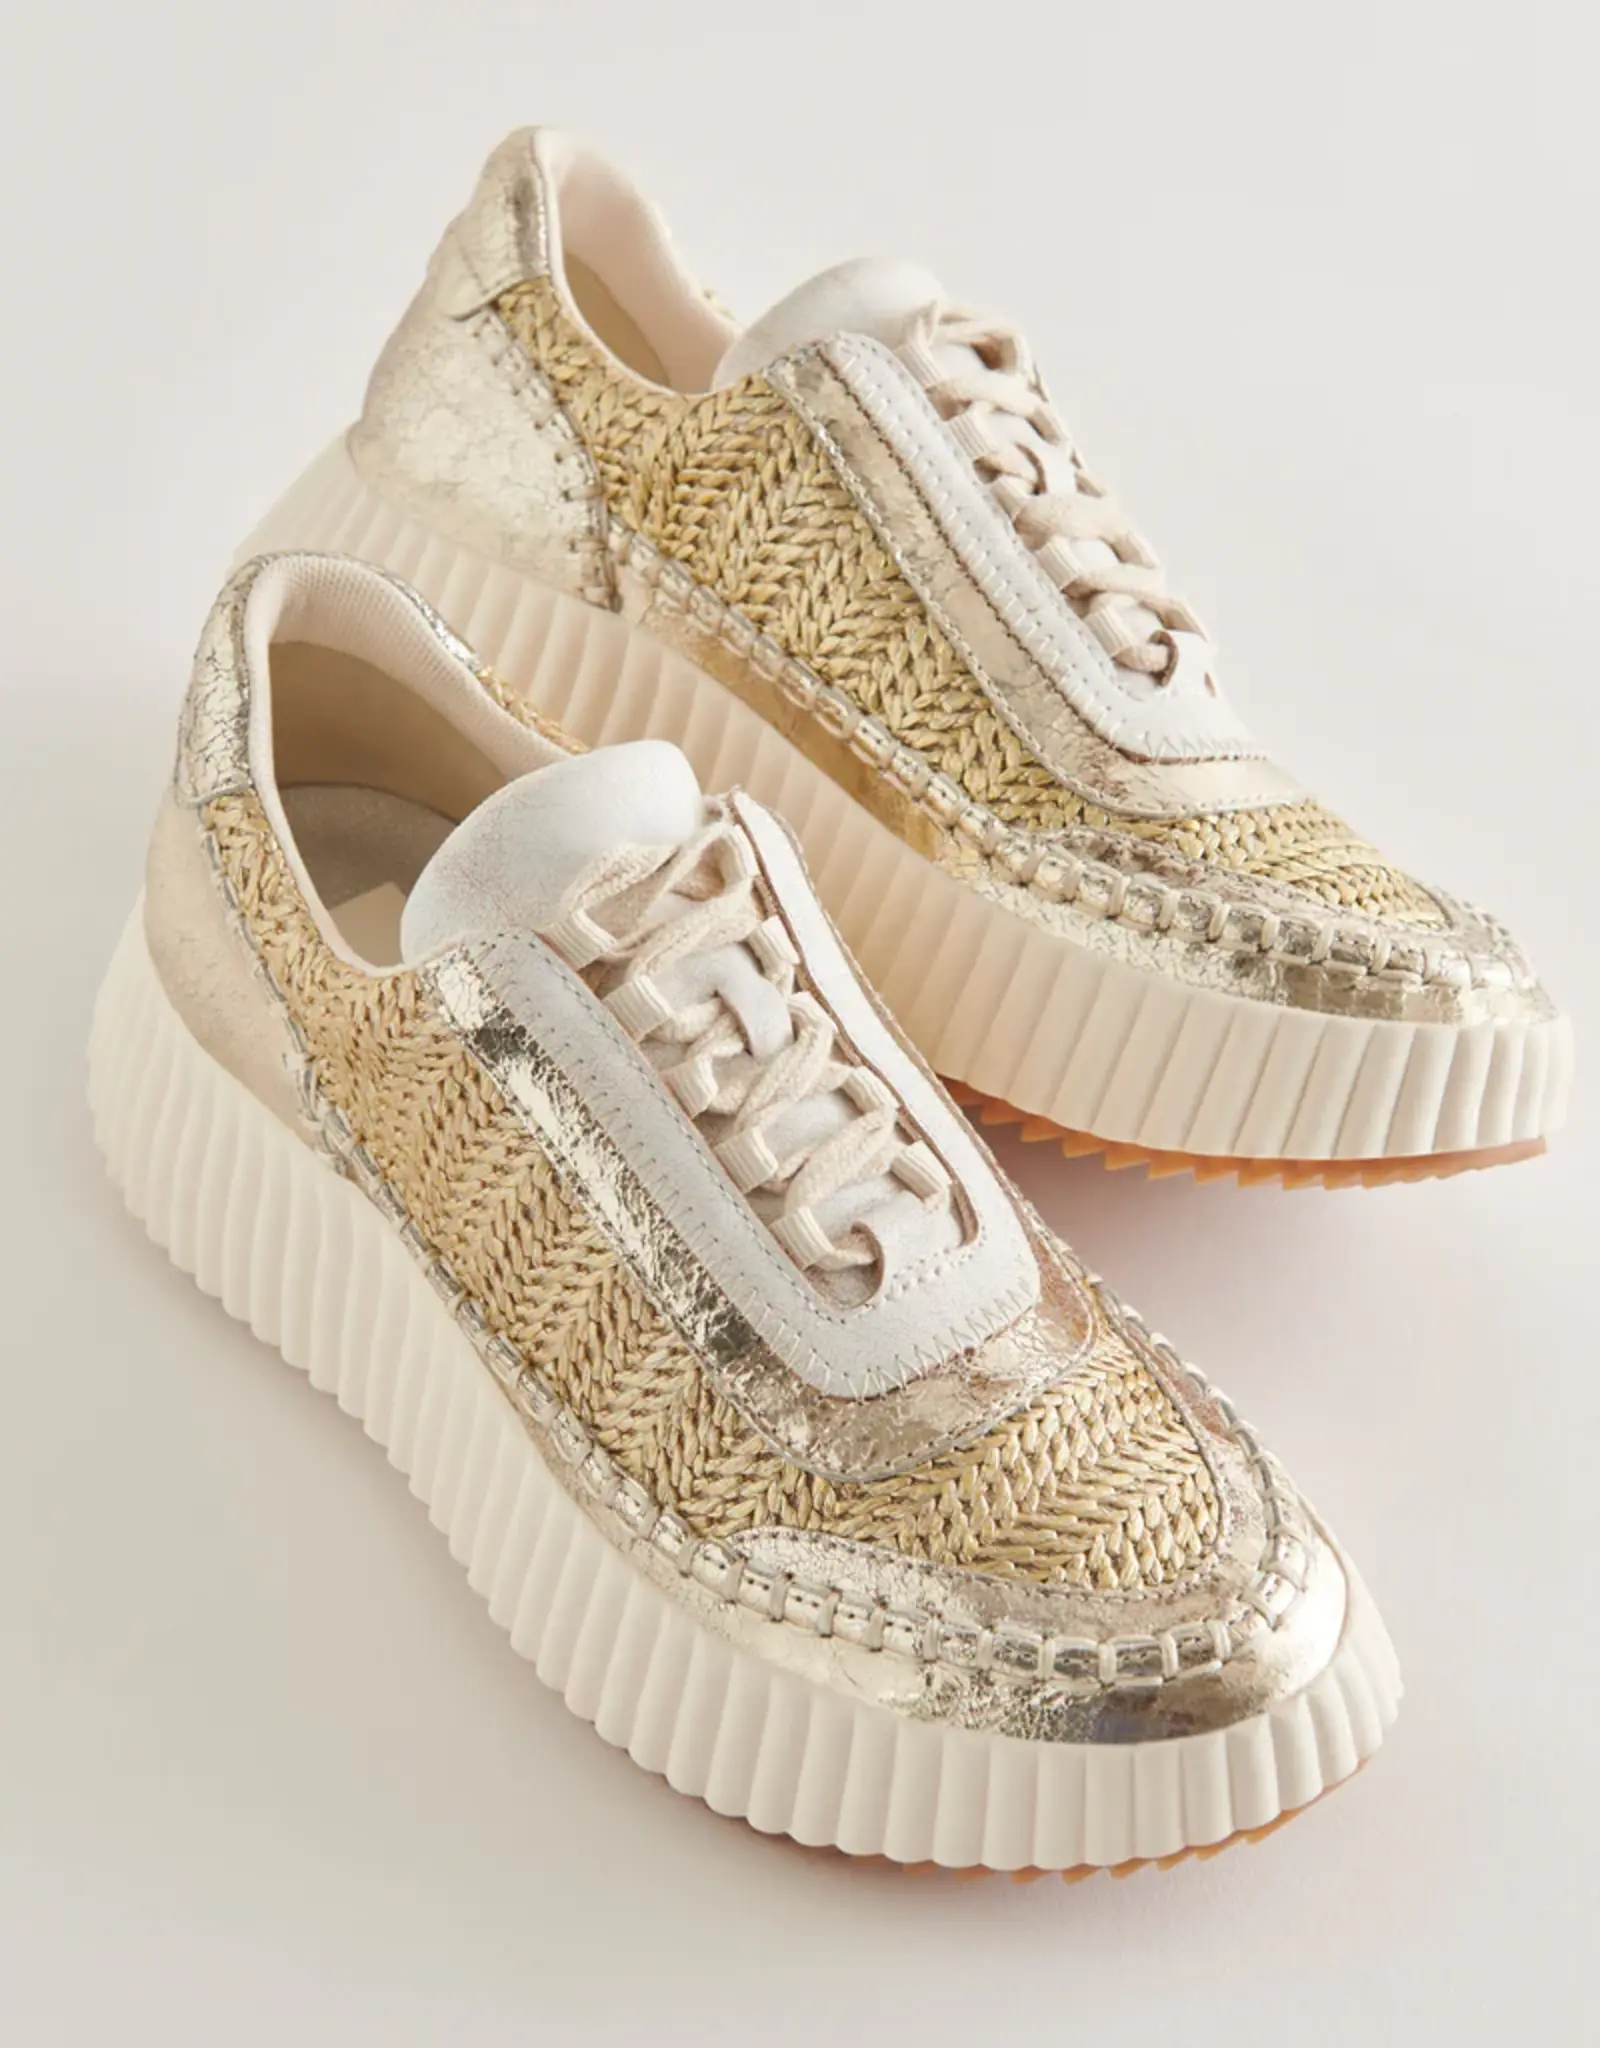 Dolce Vita Dolen Dolce Vita Gold Knit Sneakers